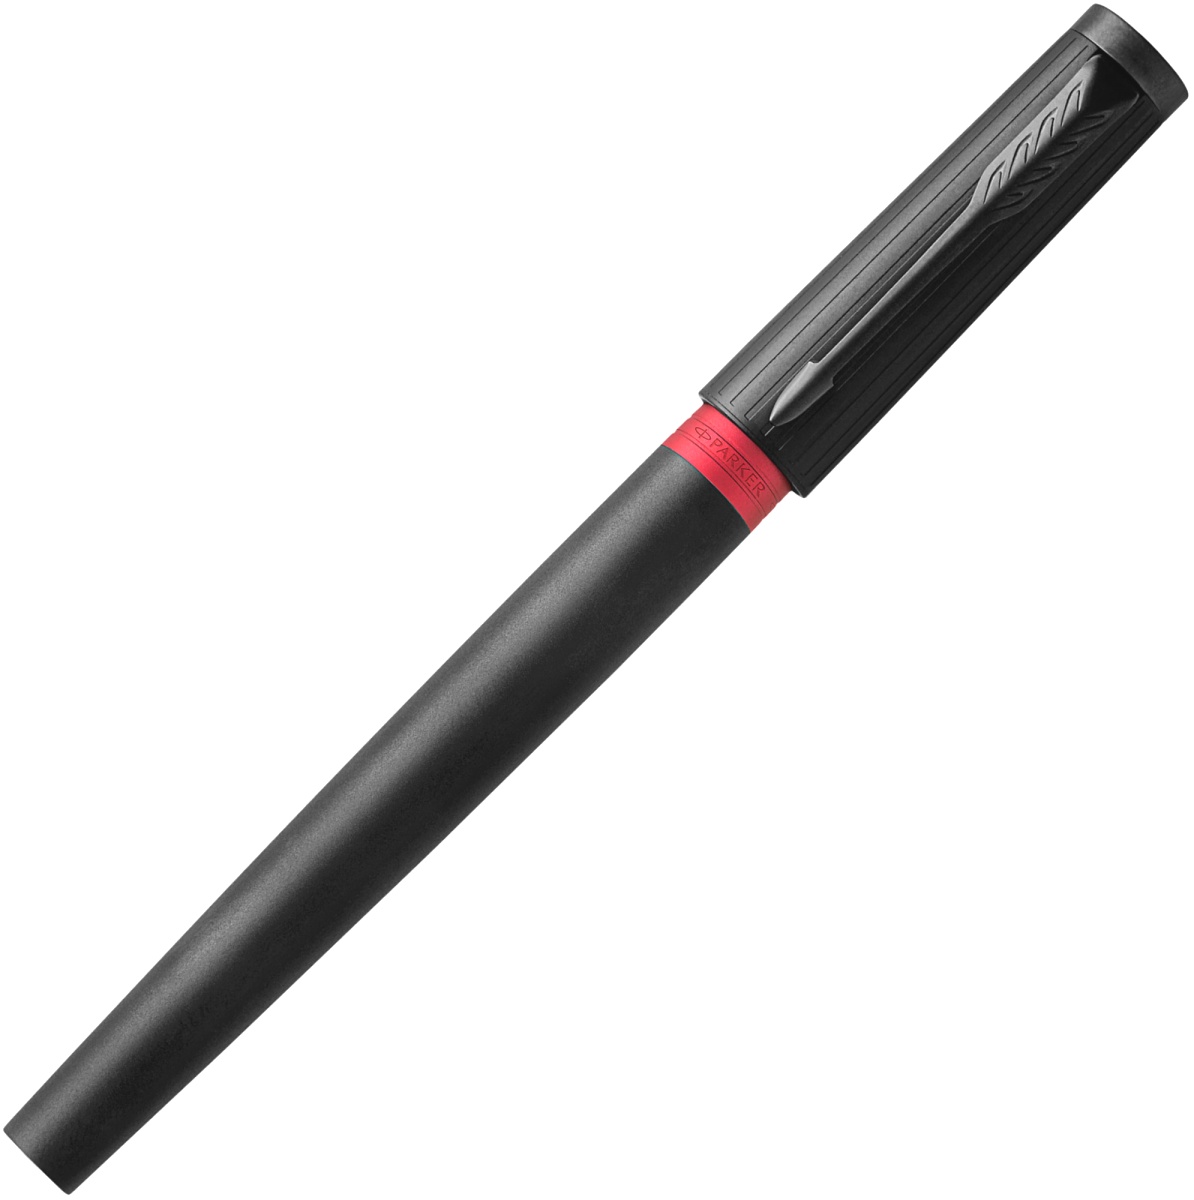 Ручка 5й пишущий узел Parker Ingenuity Large F504, Black Red PVD, фото 2